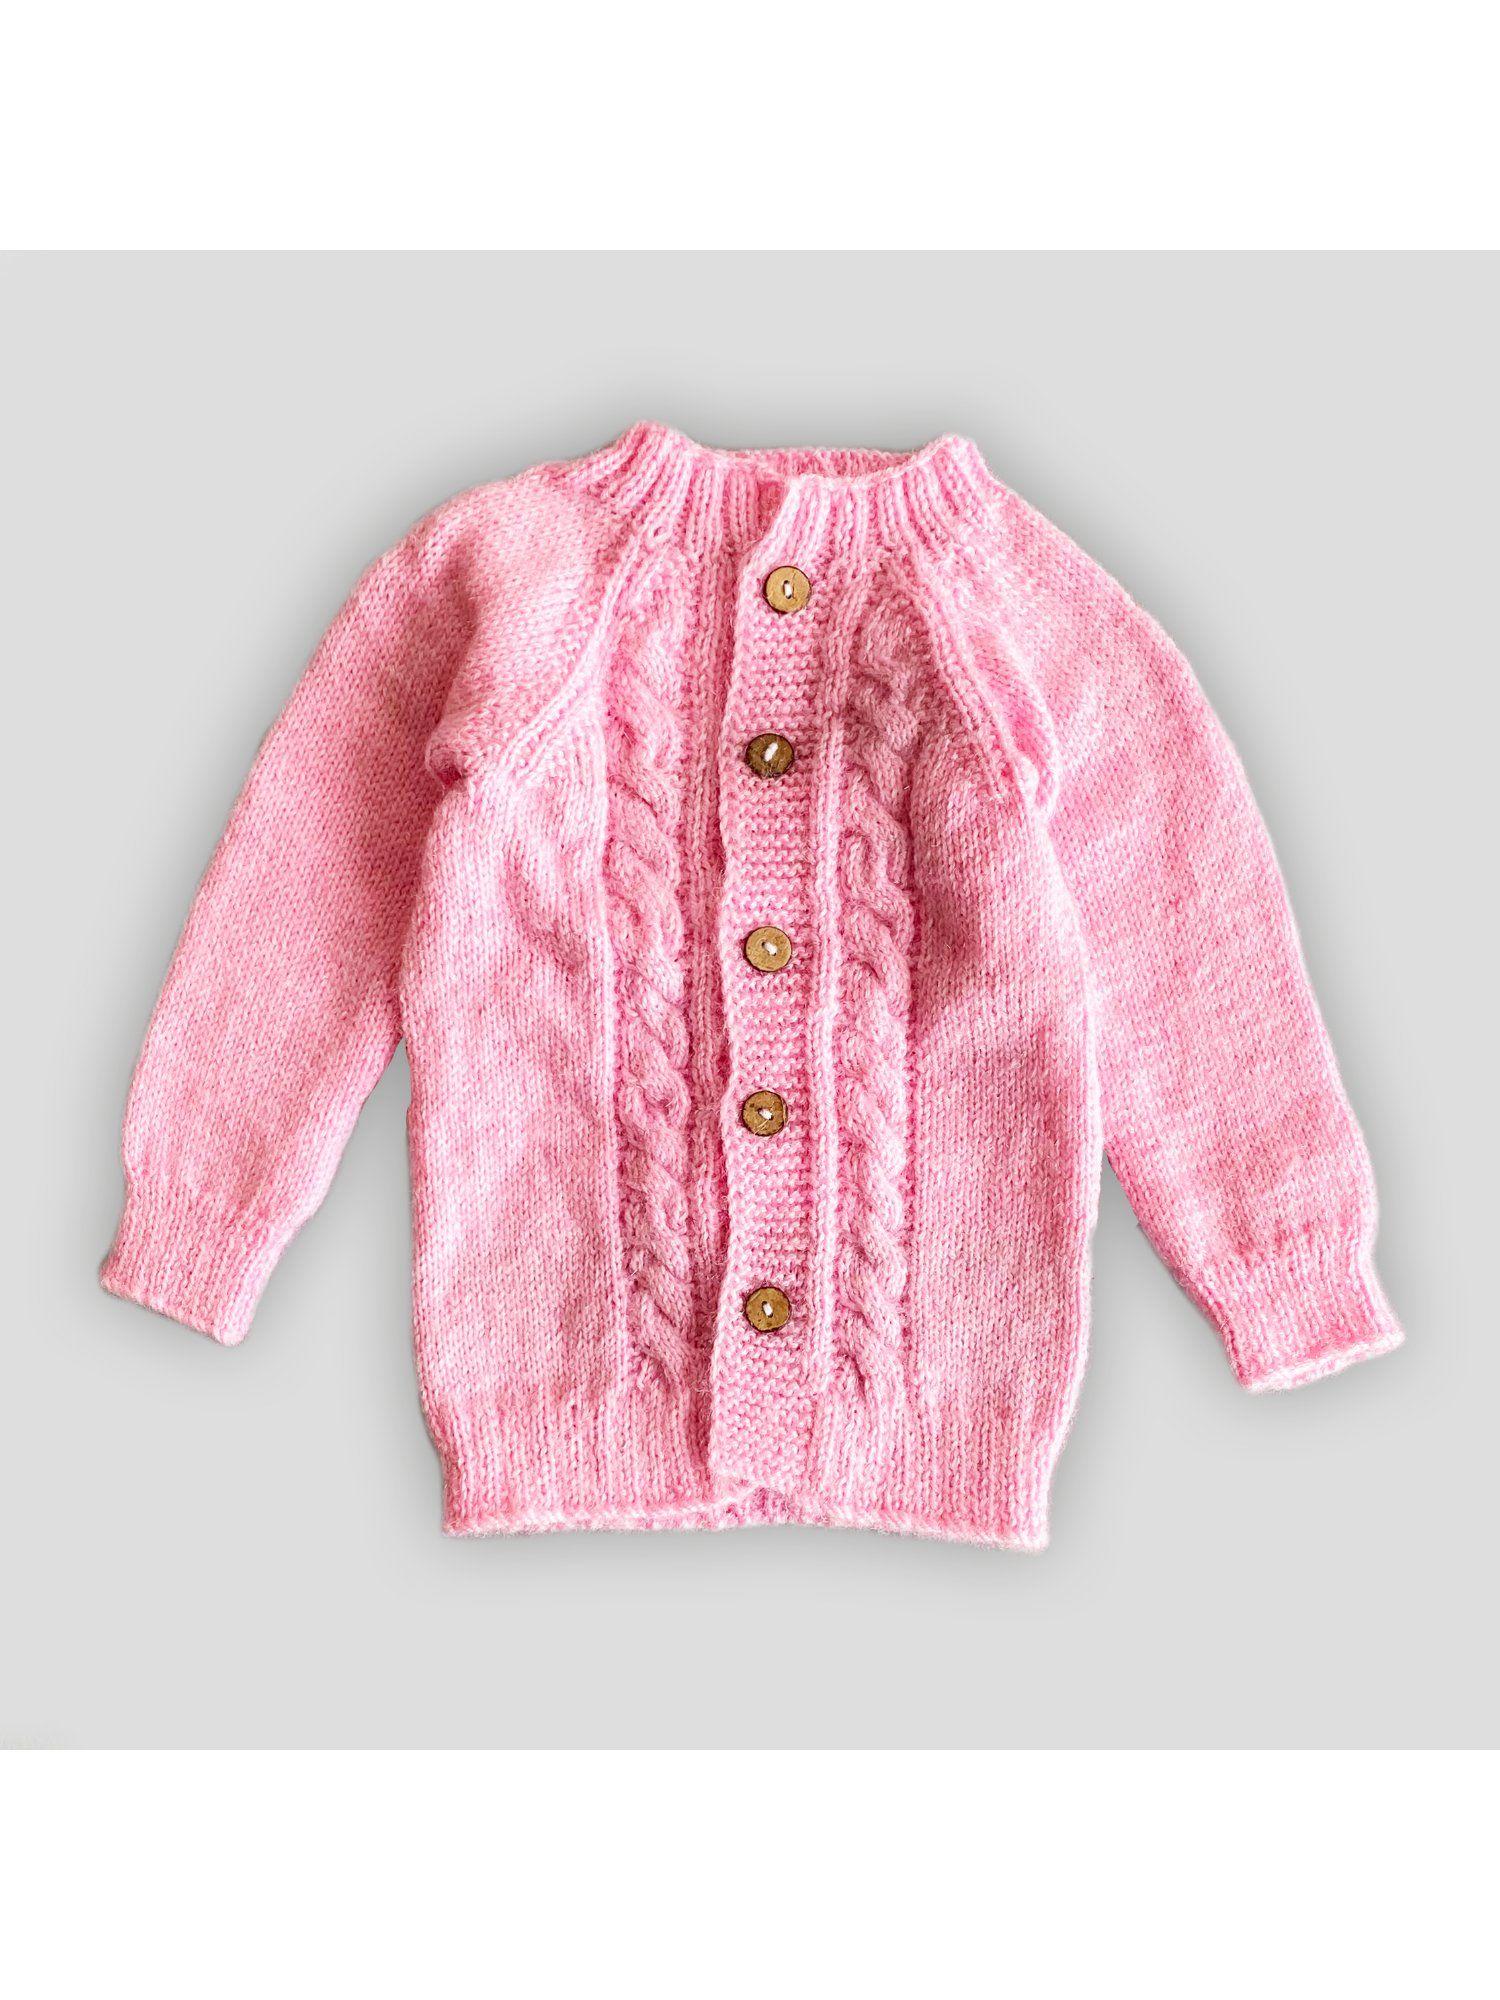 handmade full sleeves sweater - pink